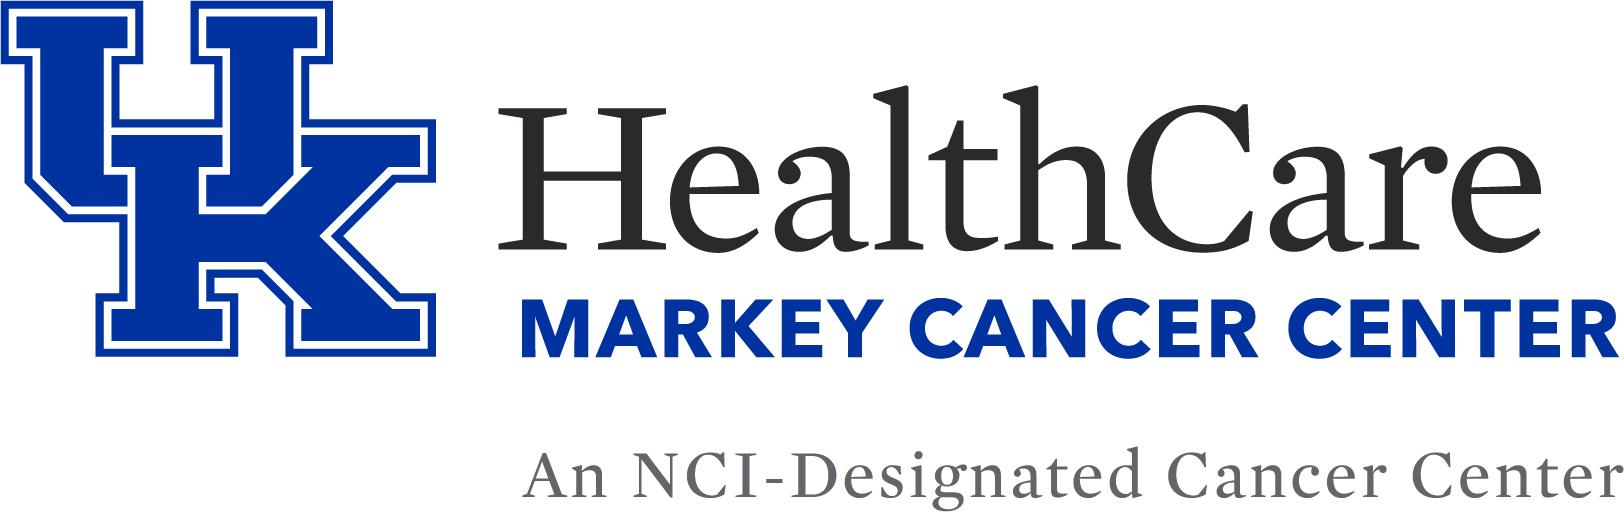 University of Kentucky Markey Cancer Center